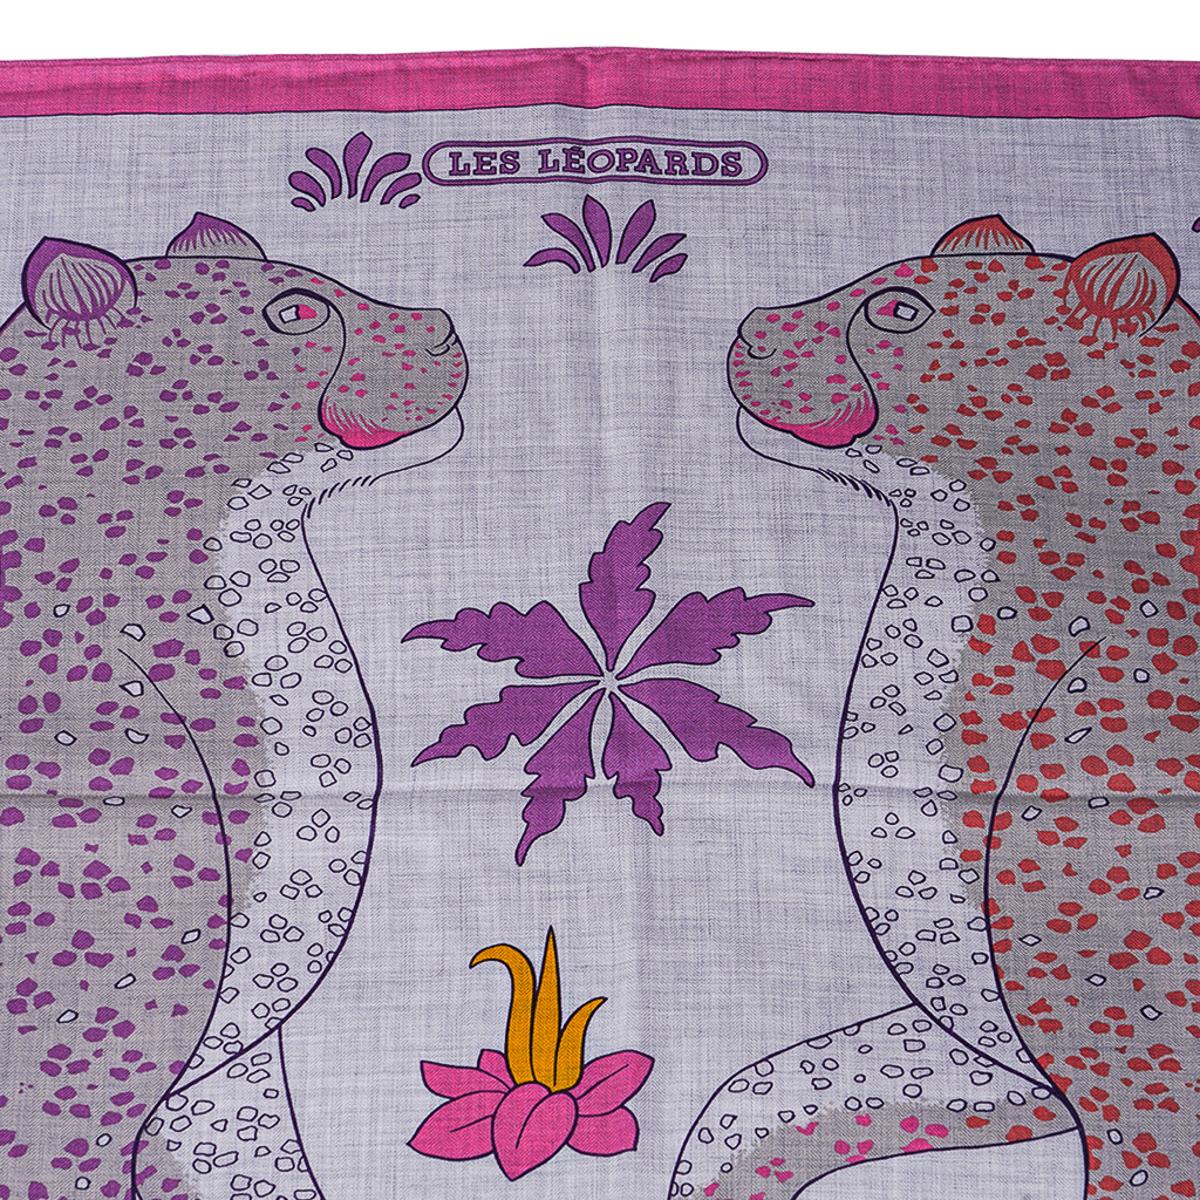 Women's Hermes Les Leopards Gris Chine / Rose / Orange Shawl Cashmere Silk Scarf 140